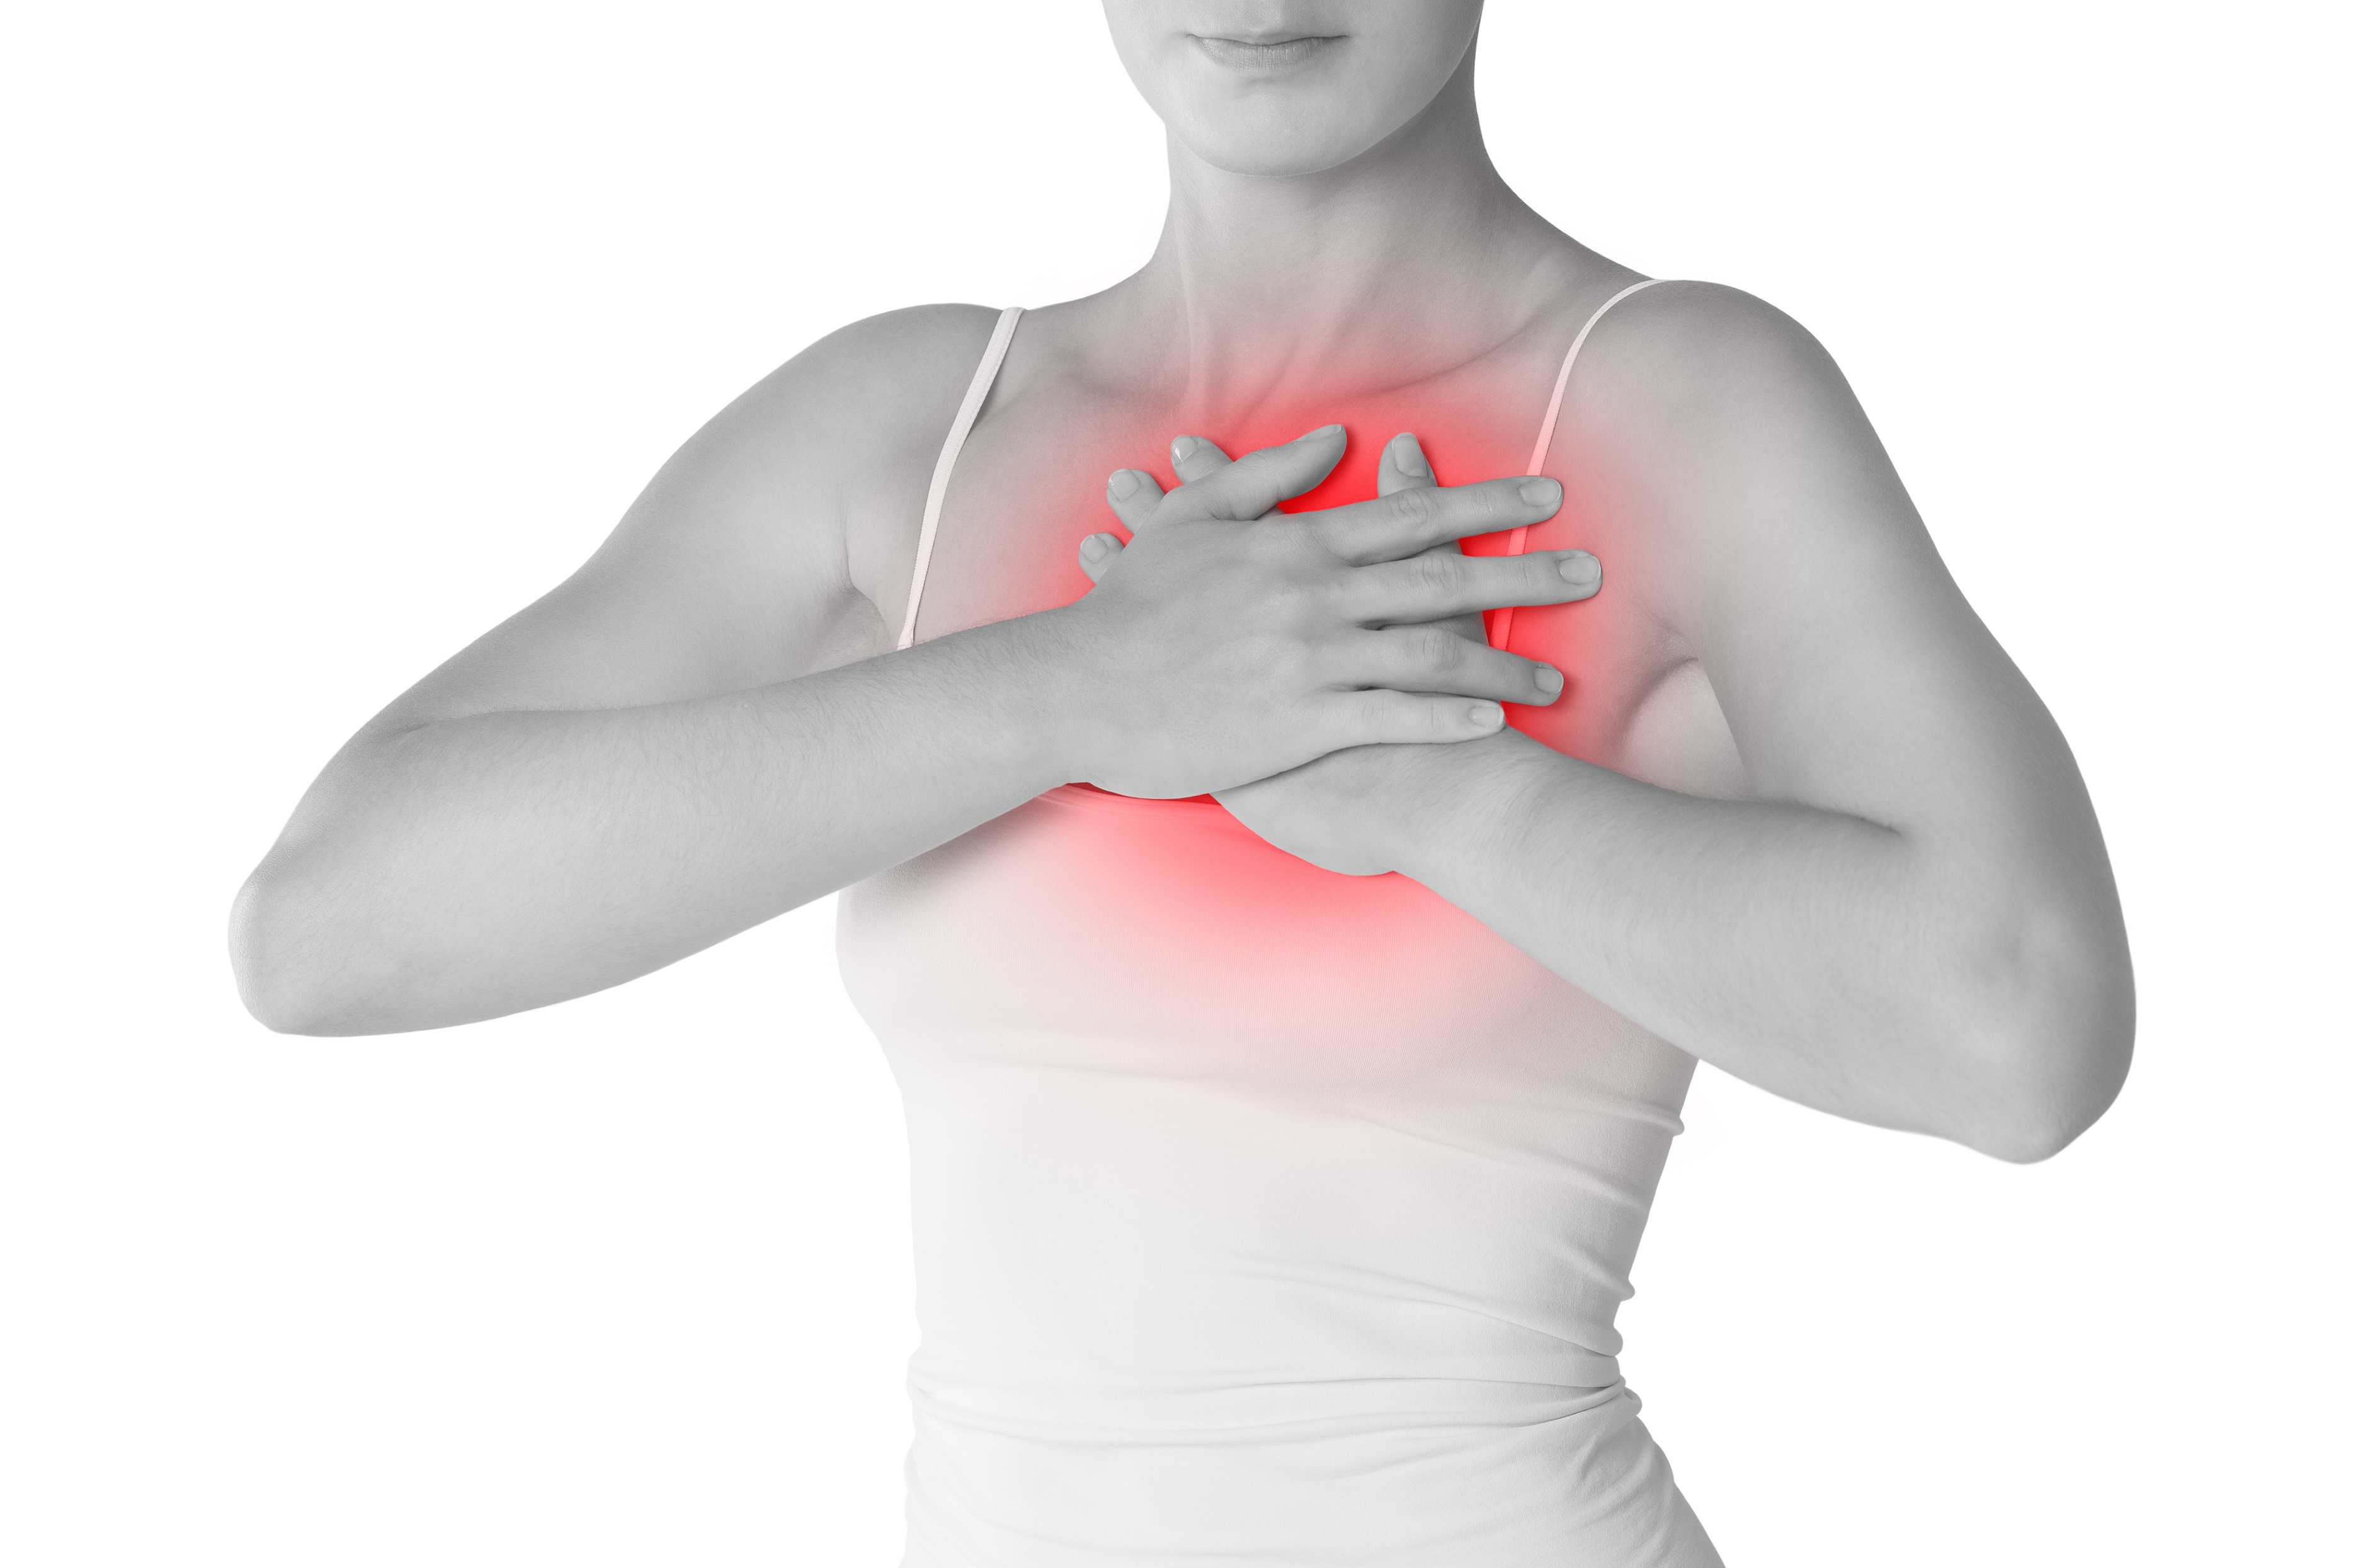 Brustmuskel trainieren frau größere brust